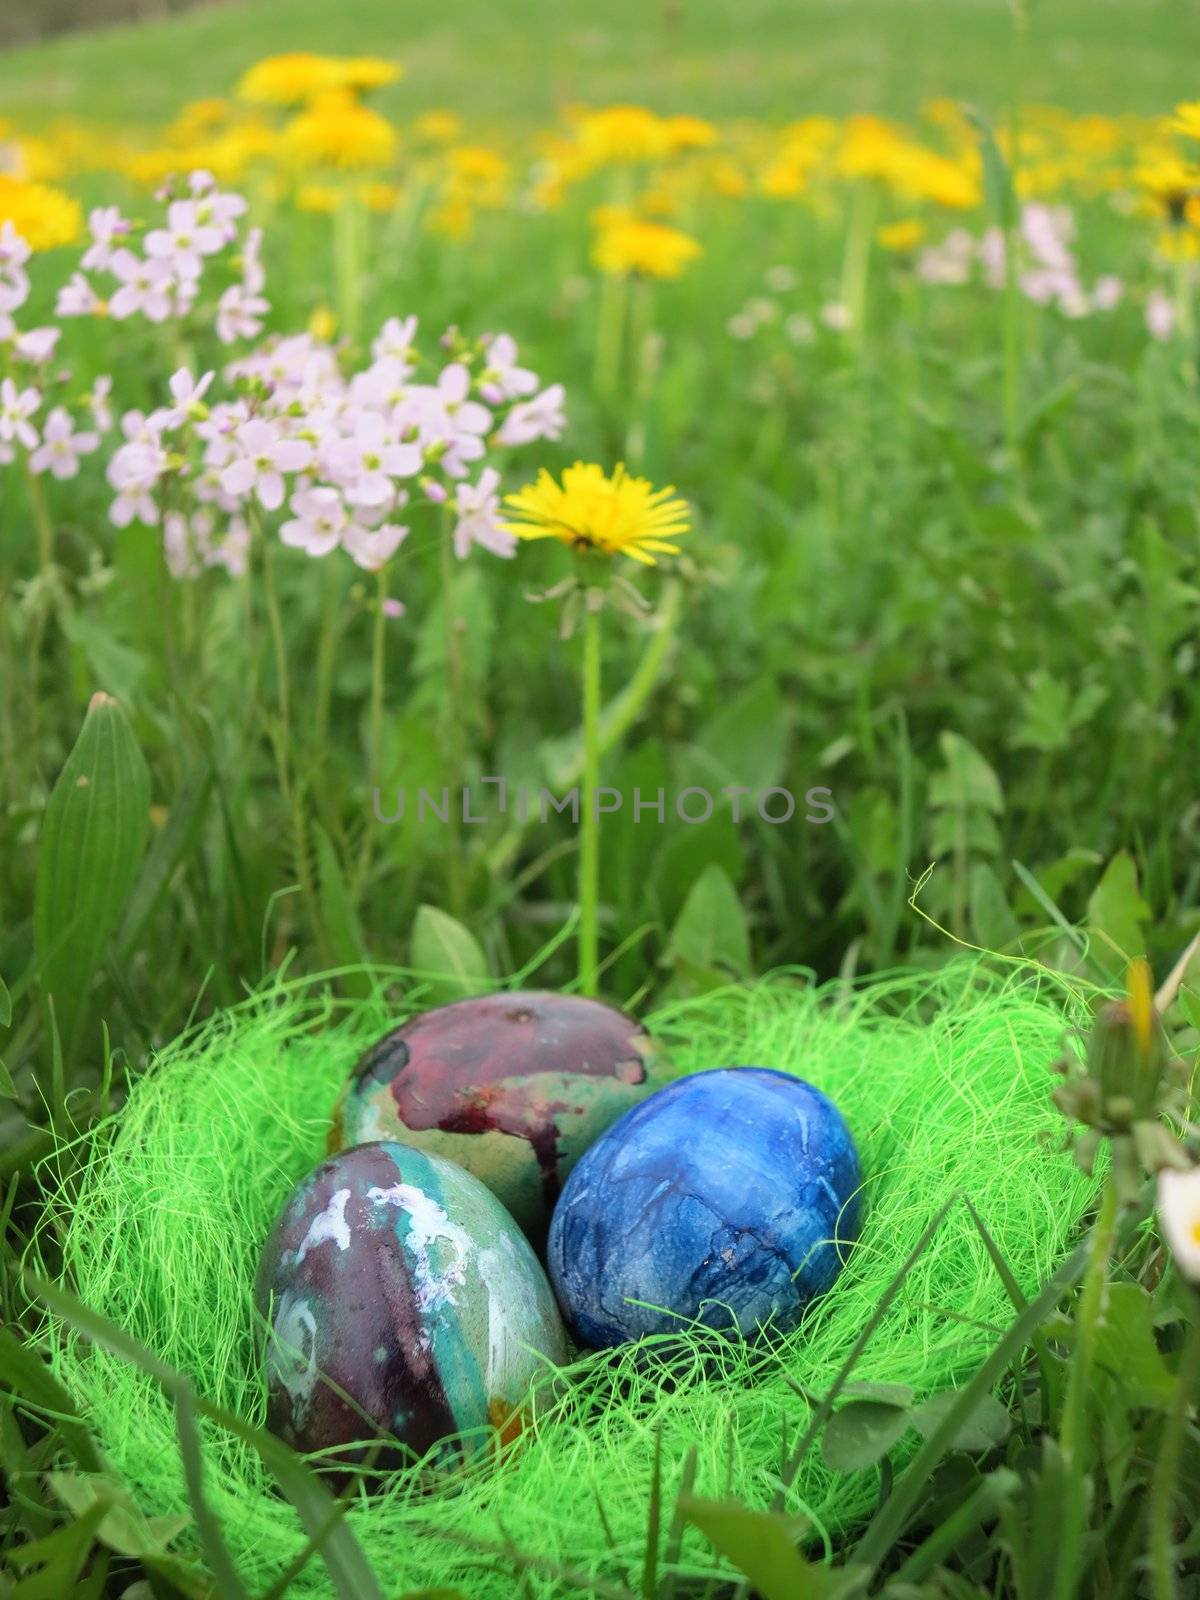 Eggs in a green grass